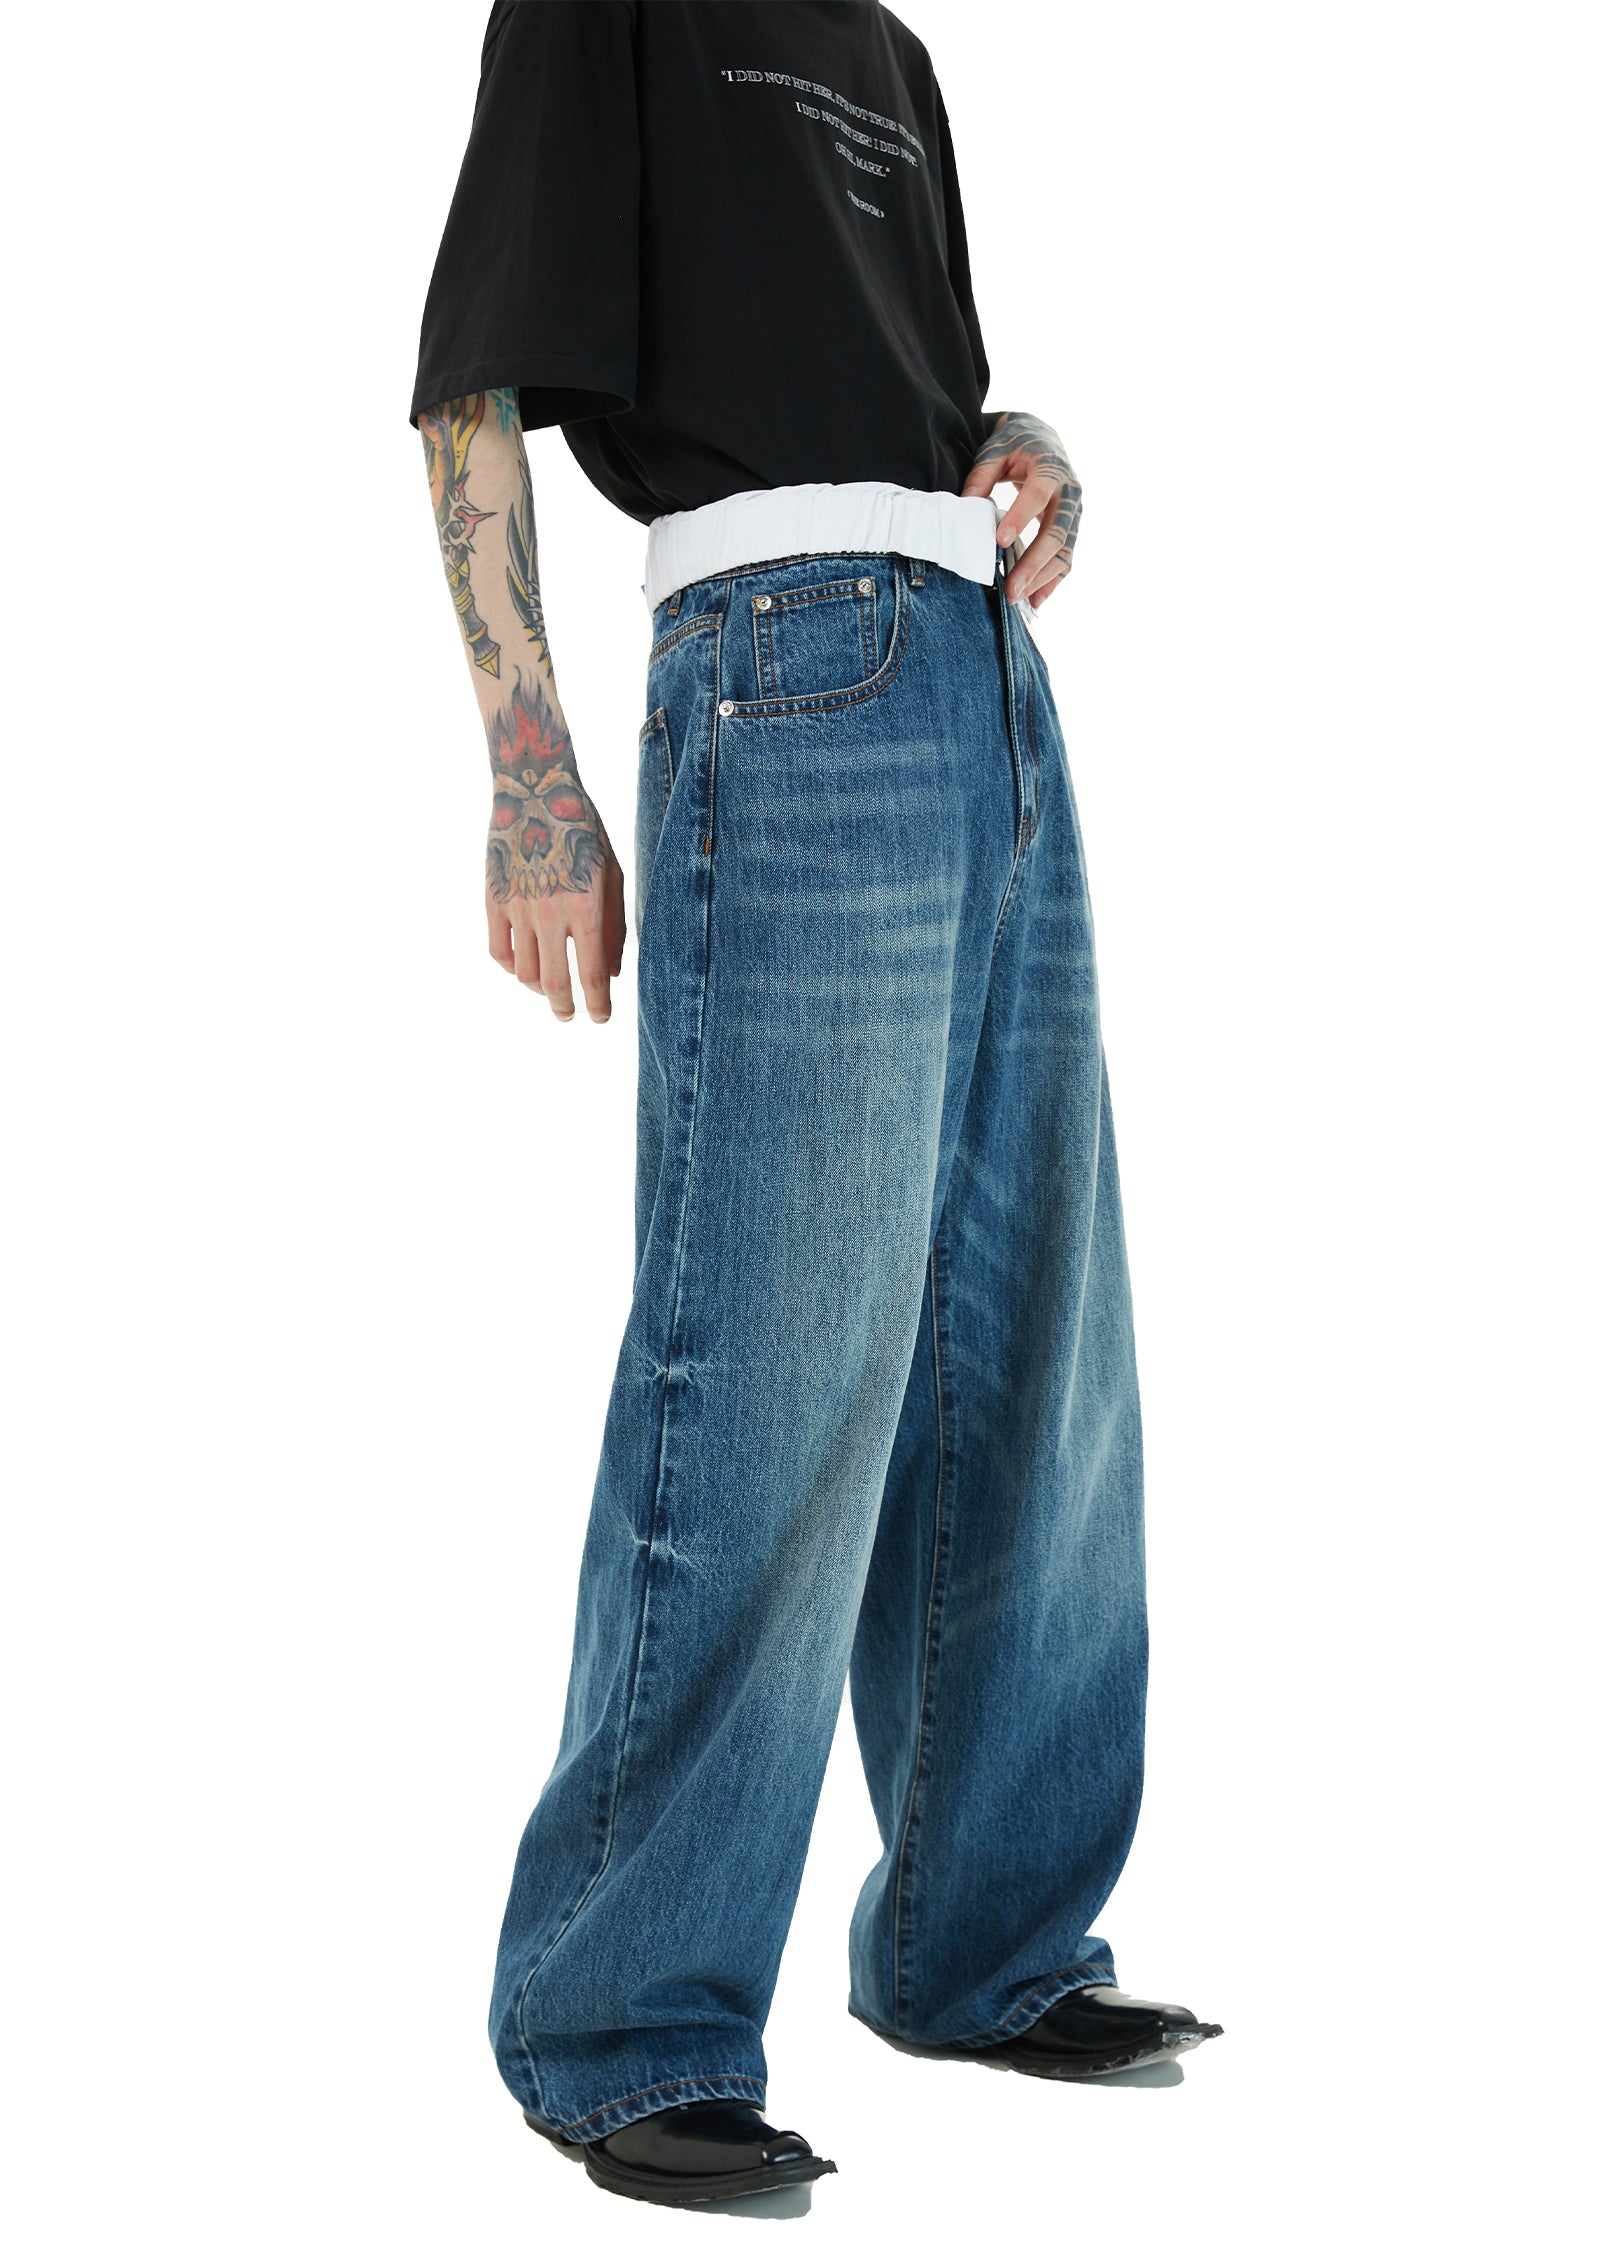 Double-Waistband denim jeans, JW Anderson